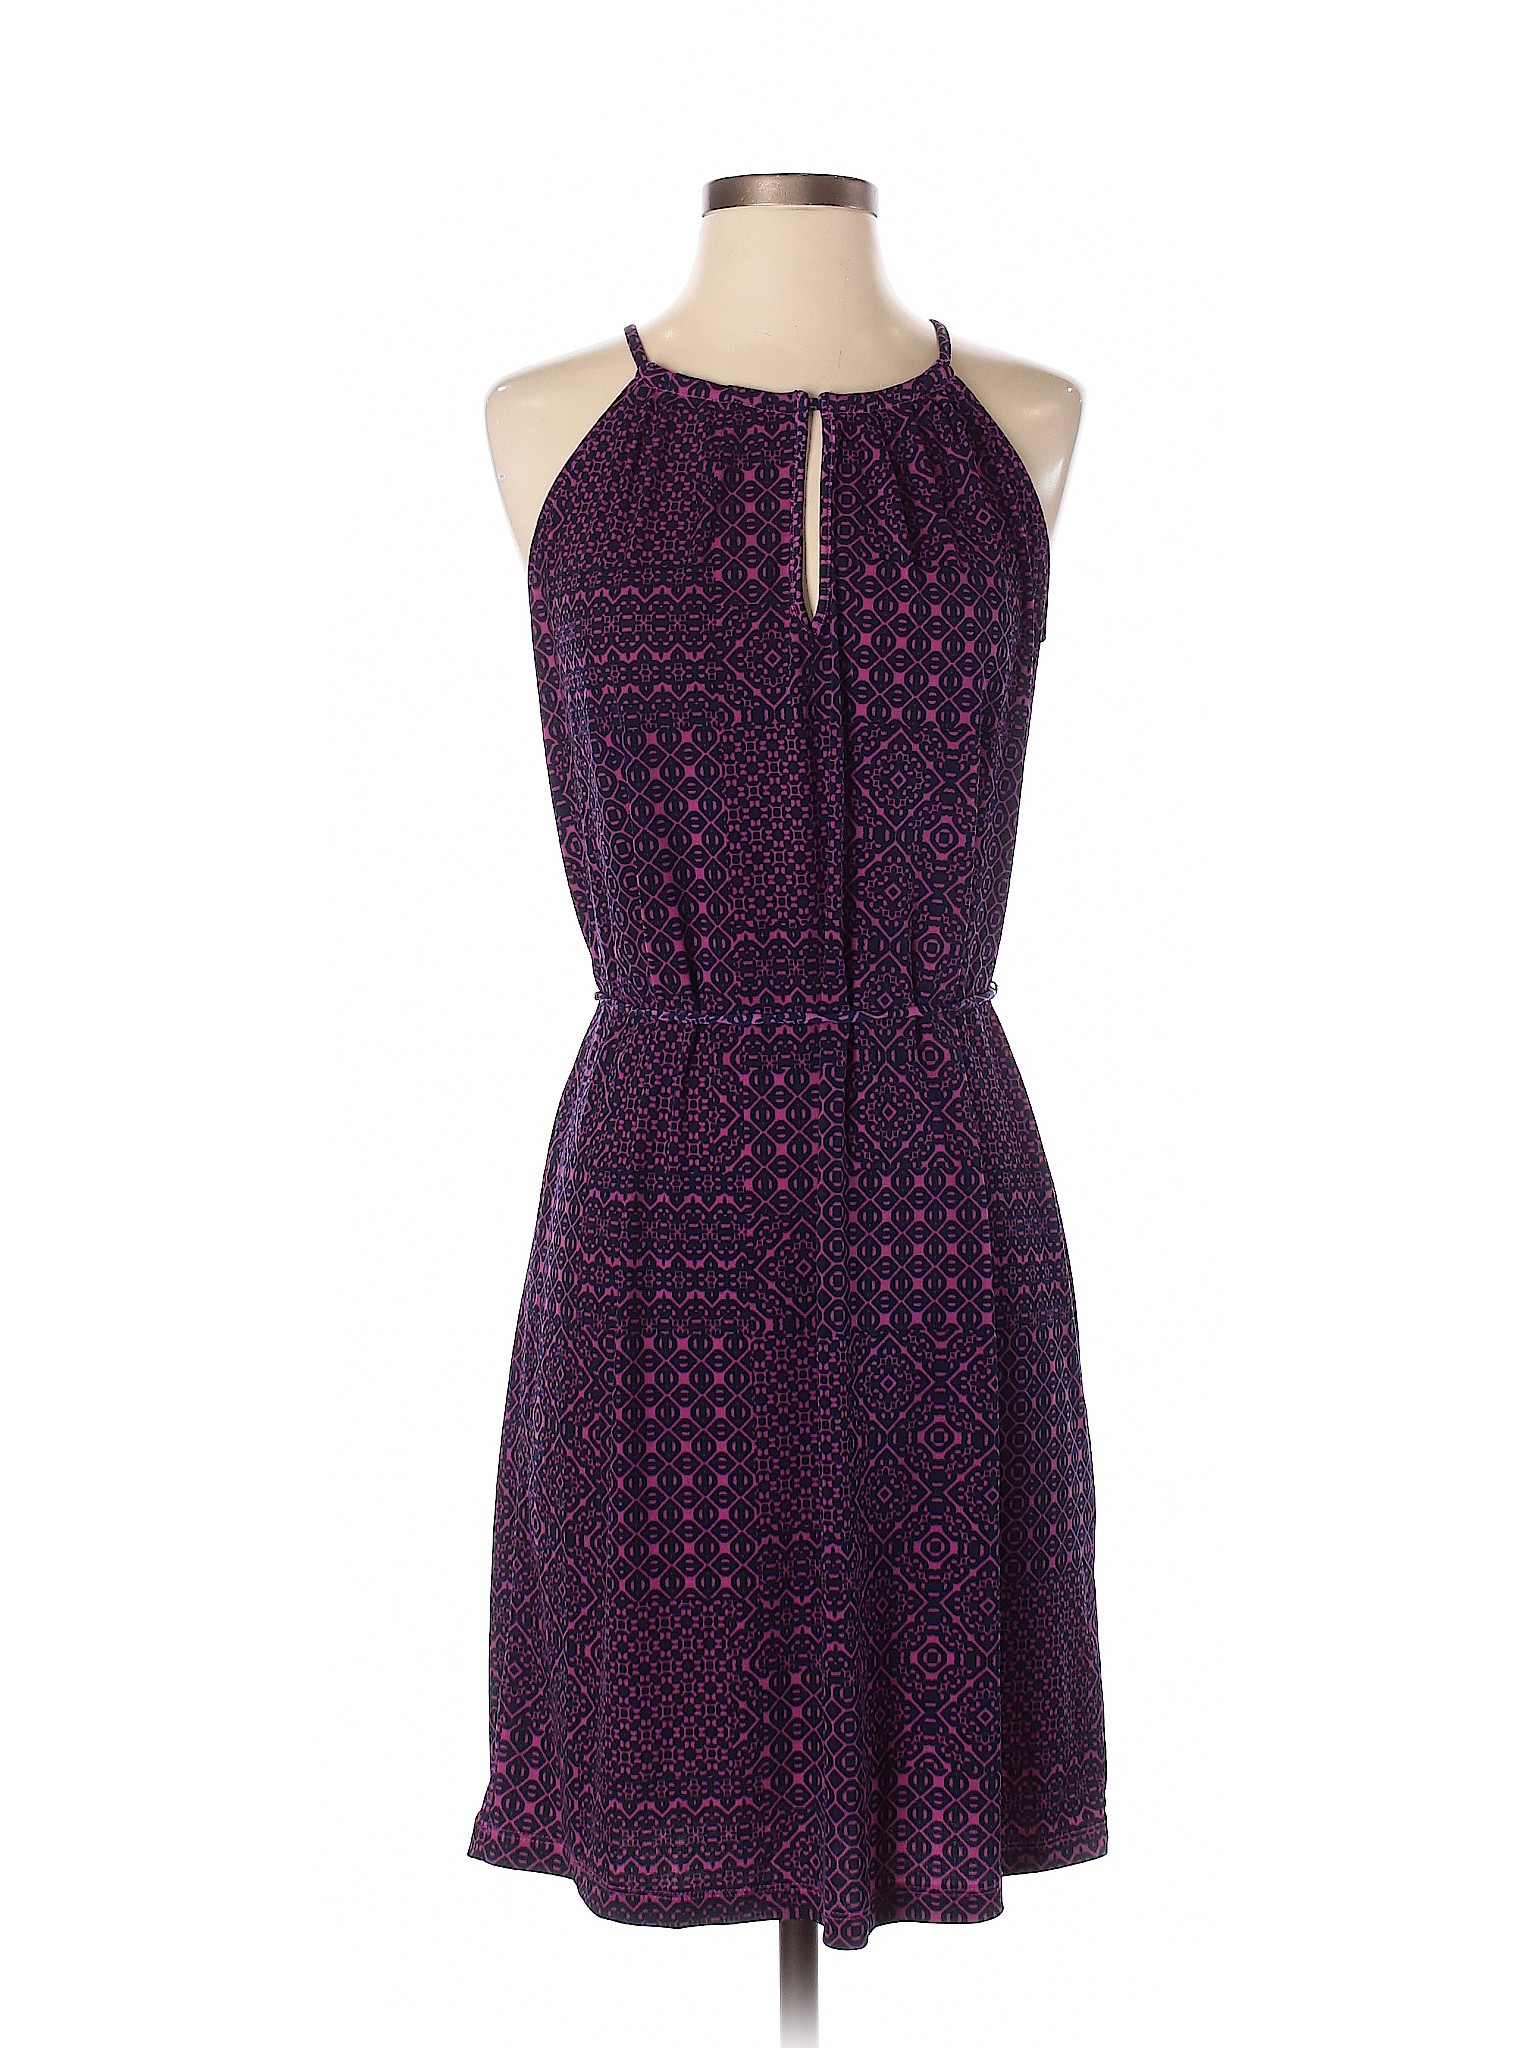 Banana Republic Factory Store Women Purple Casual Dress S | eBay